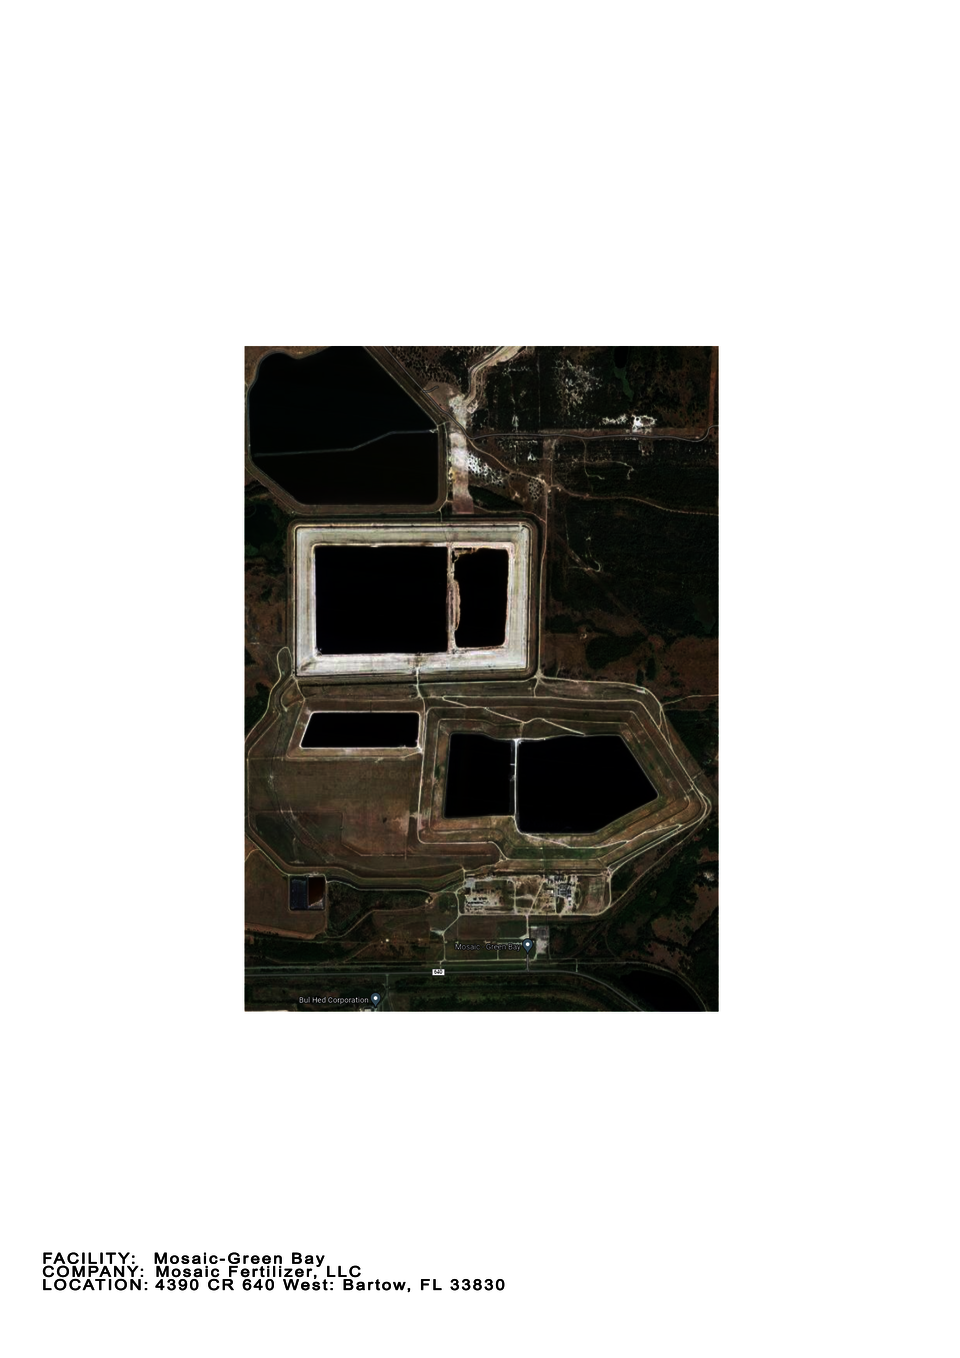 Satellite image of a gypstack built by Mosaic Fertilizer LLC in Bartow, FL 